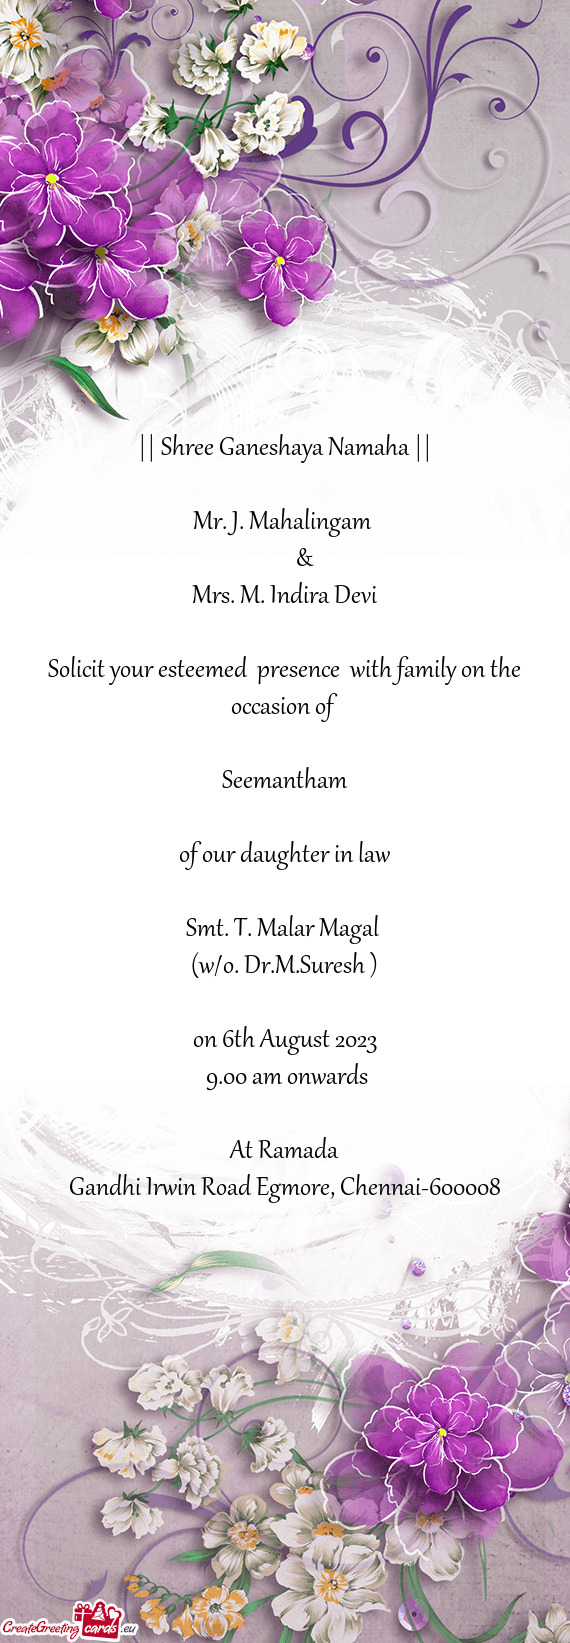 Mrs. M. Indira Devi